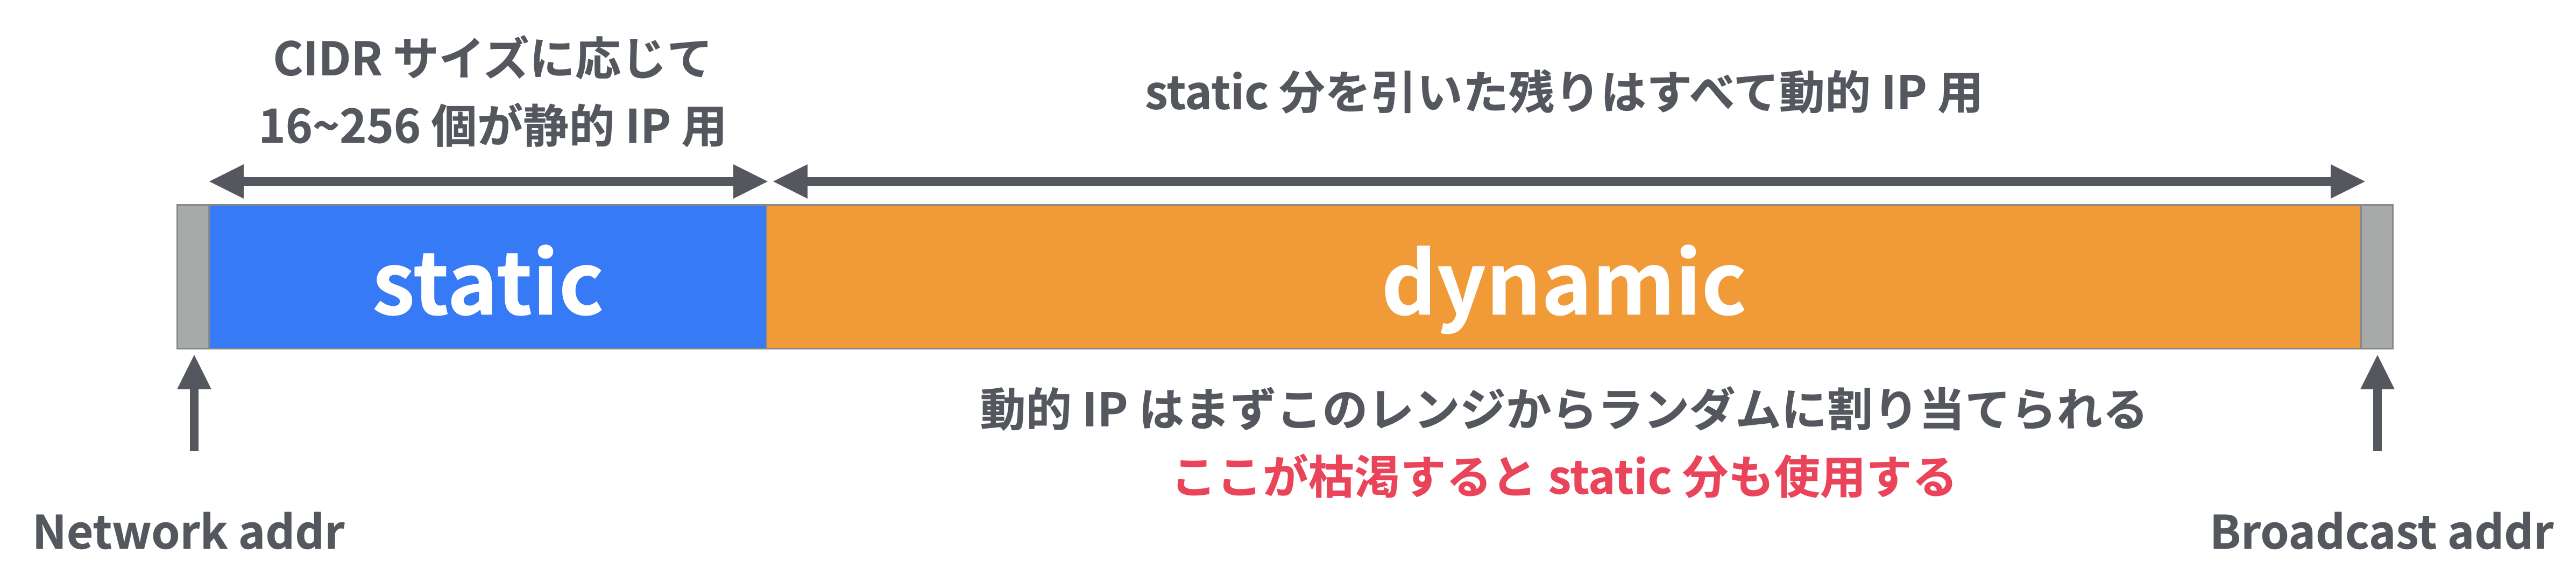 service ip static subrange